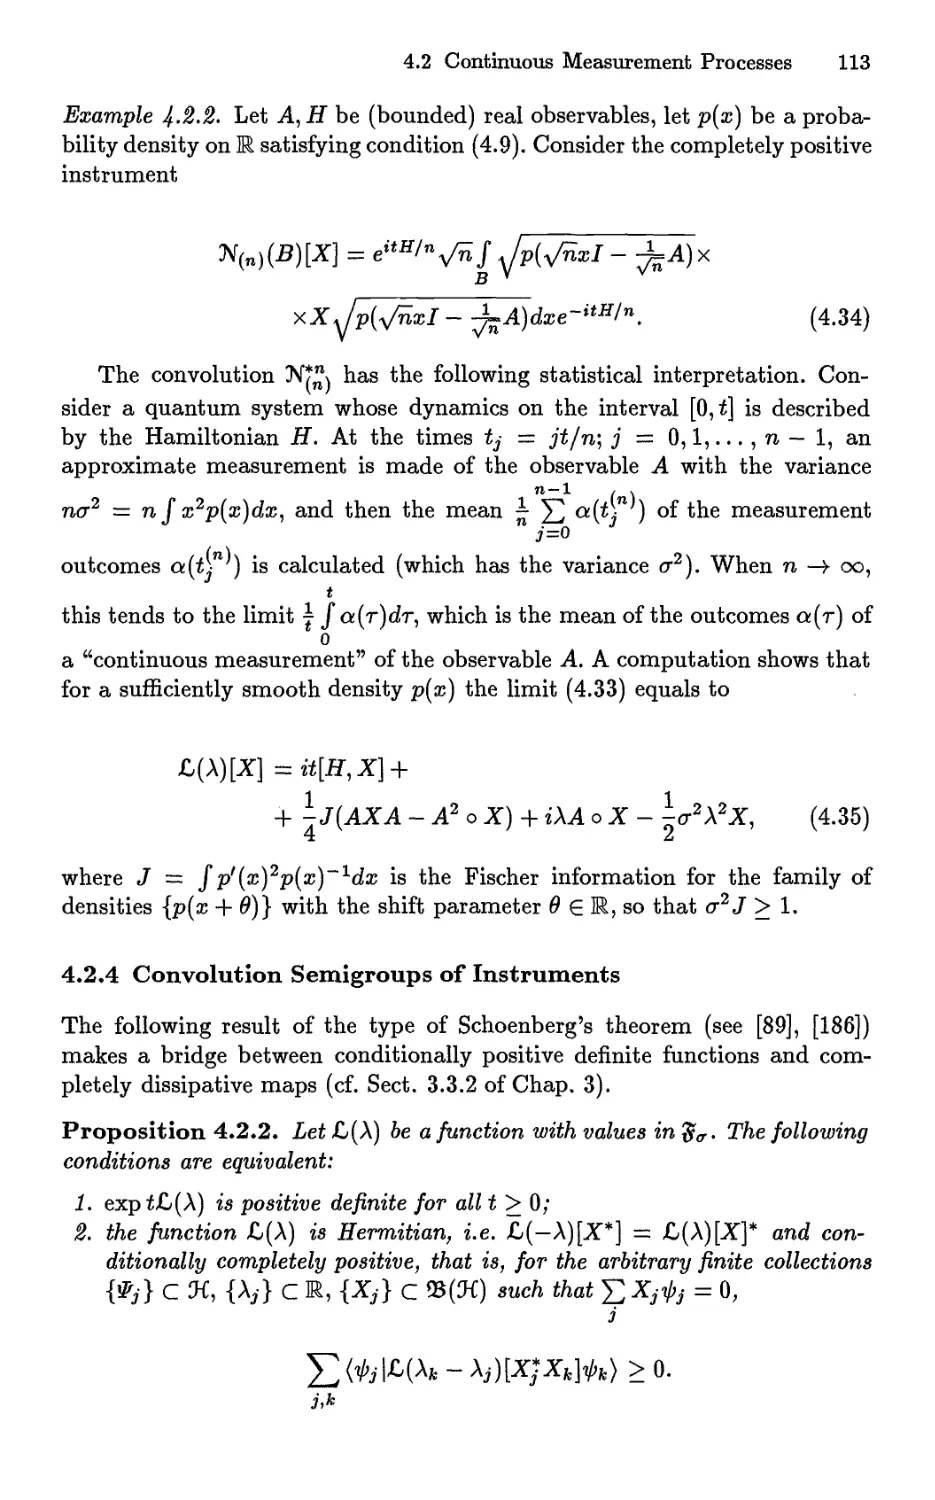 4.2.4 Convolution Semigroups of Instruments